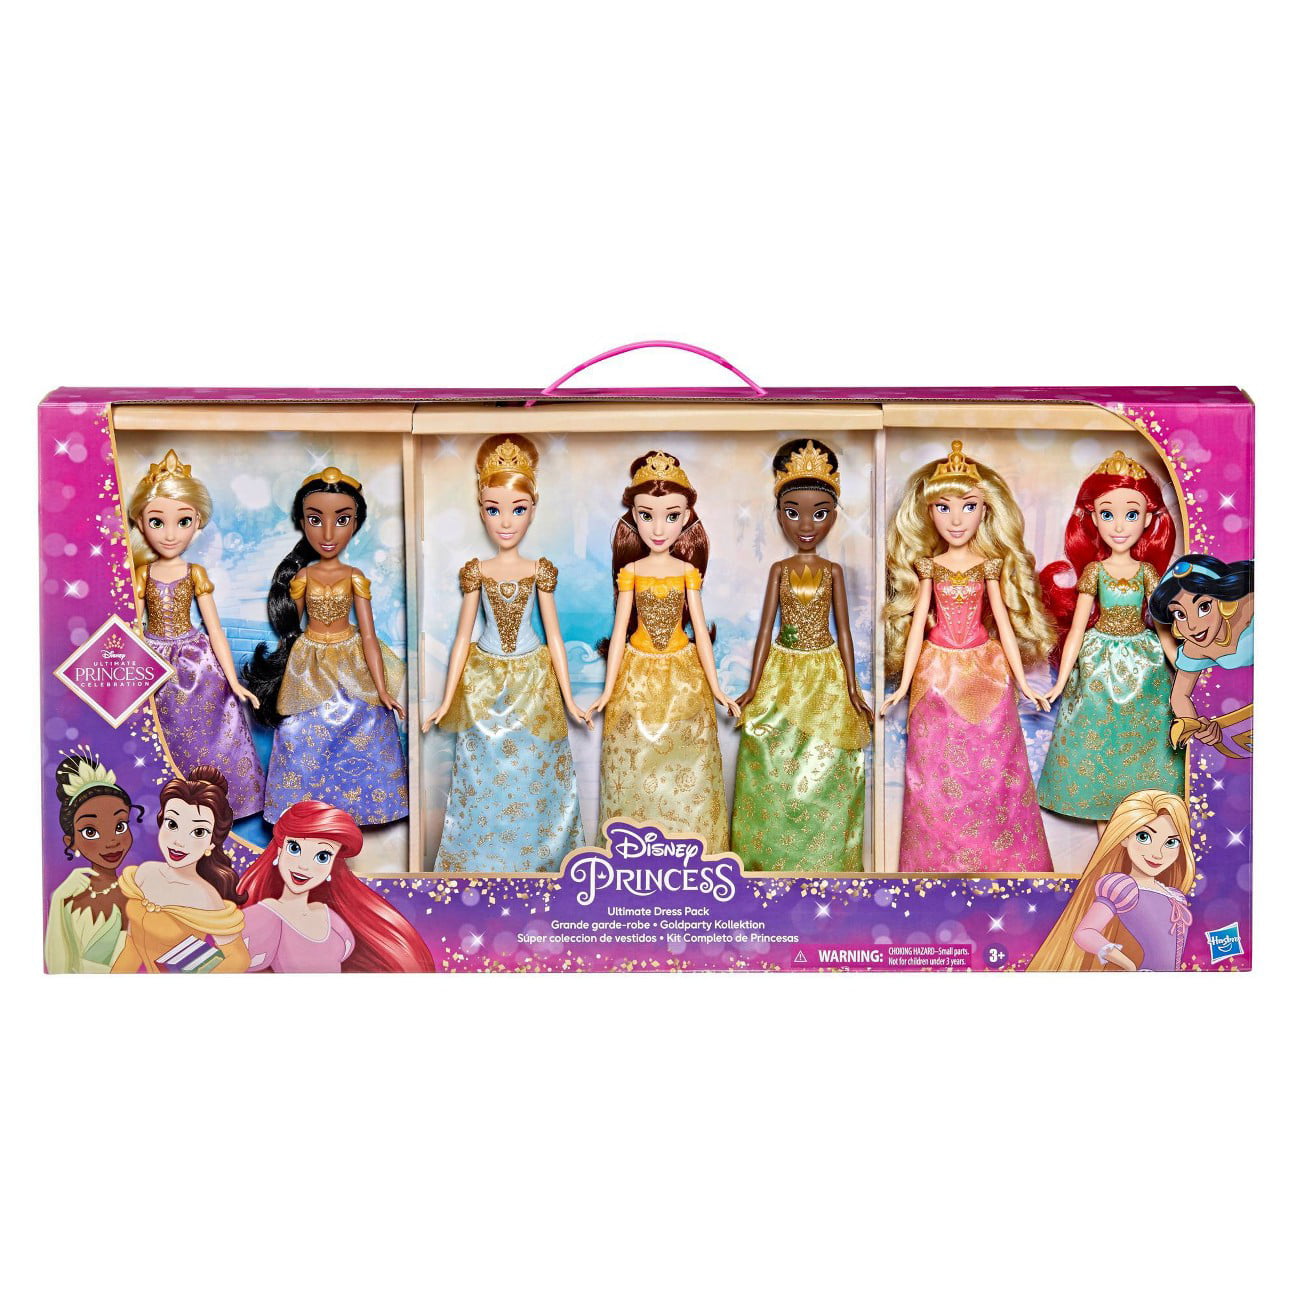 Princess Ultimate Dress Pack Collection of 7 Disney Fashion Dolls Walmart.com